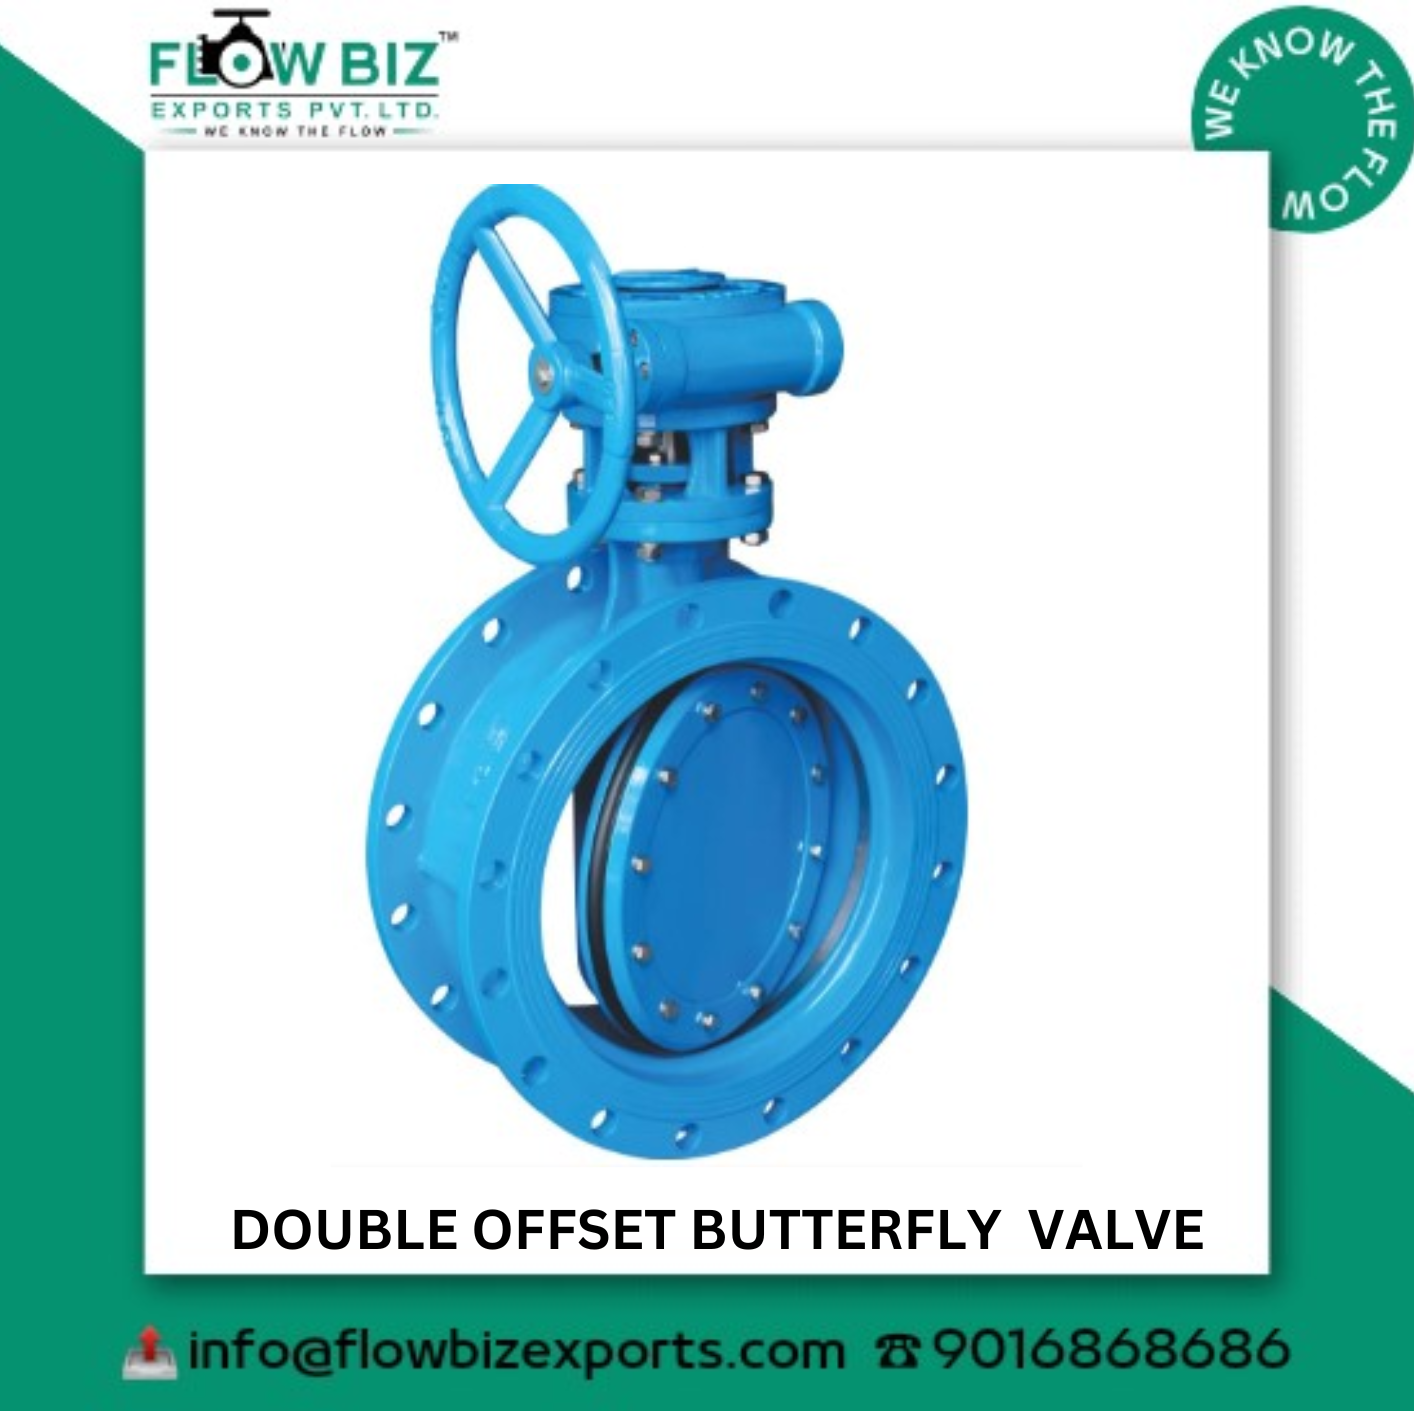 double offset butterfly valve manufacturers ahmedabad - Flowbiz